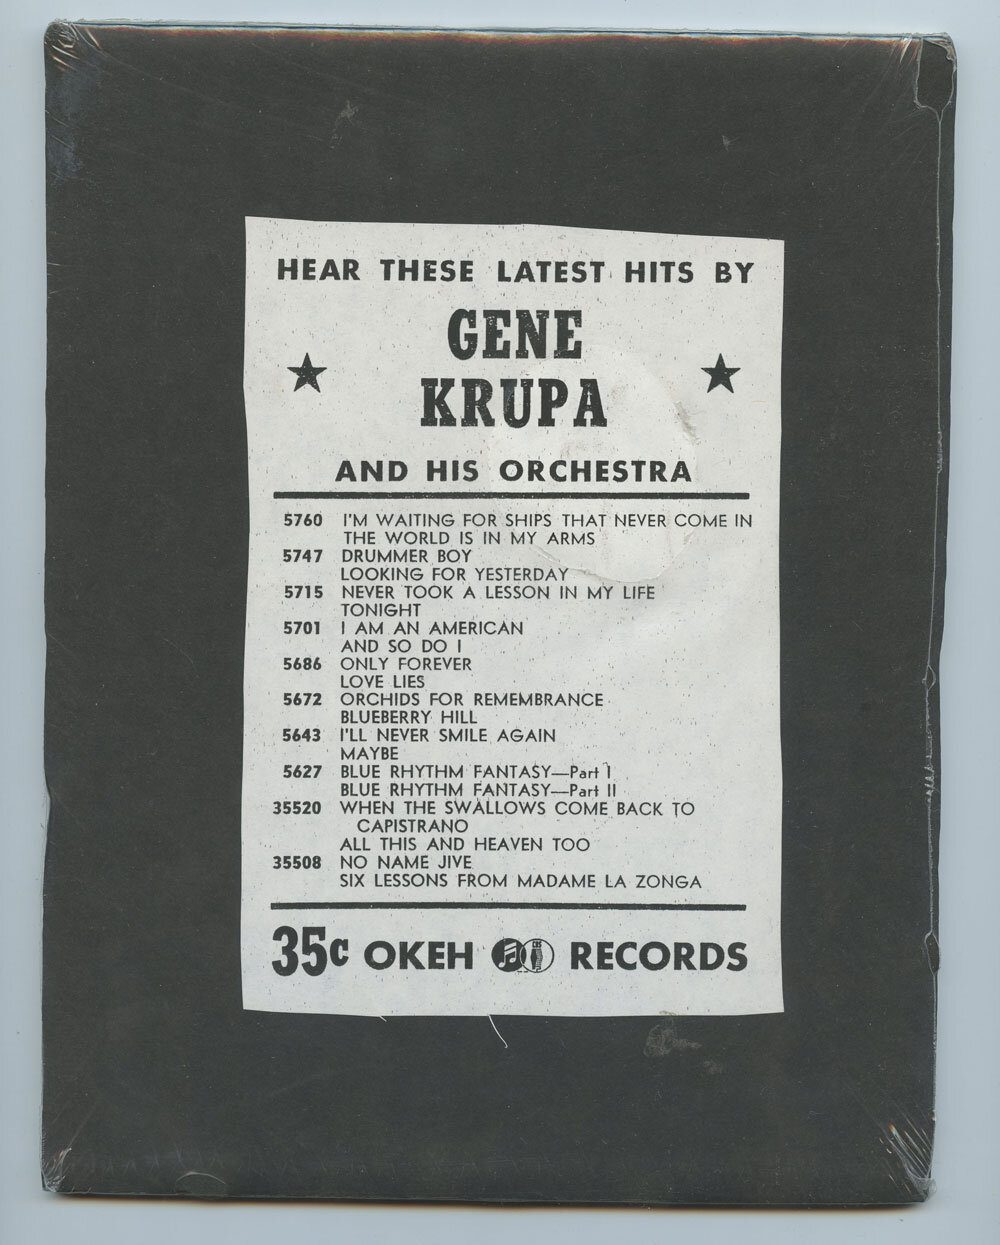 Gene Krupa Photo 1940 New Single Promo OKEH Records 